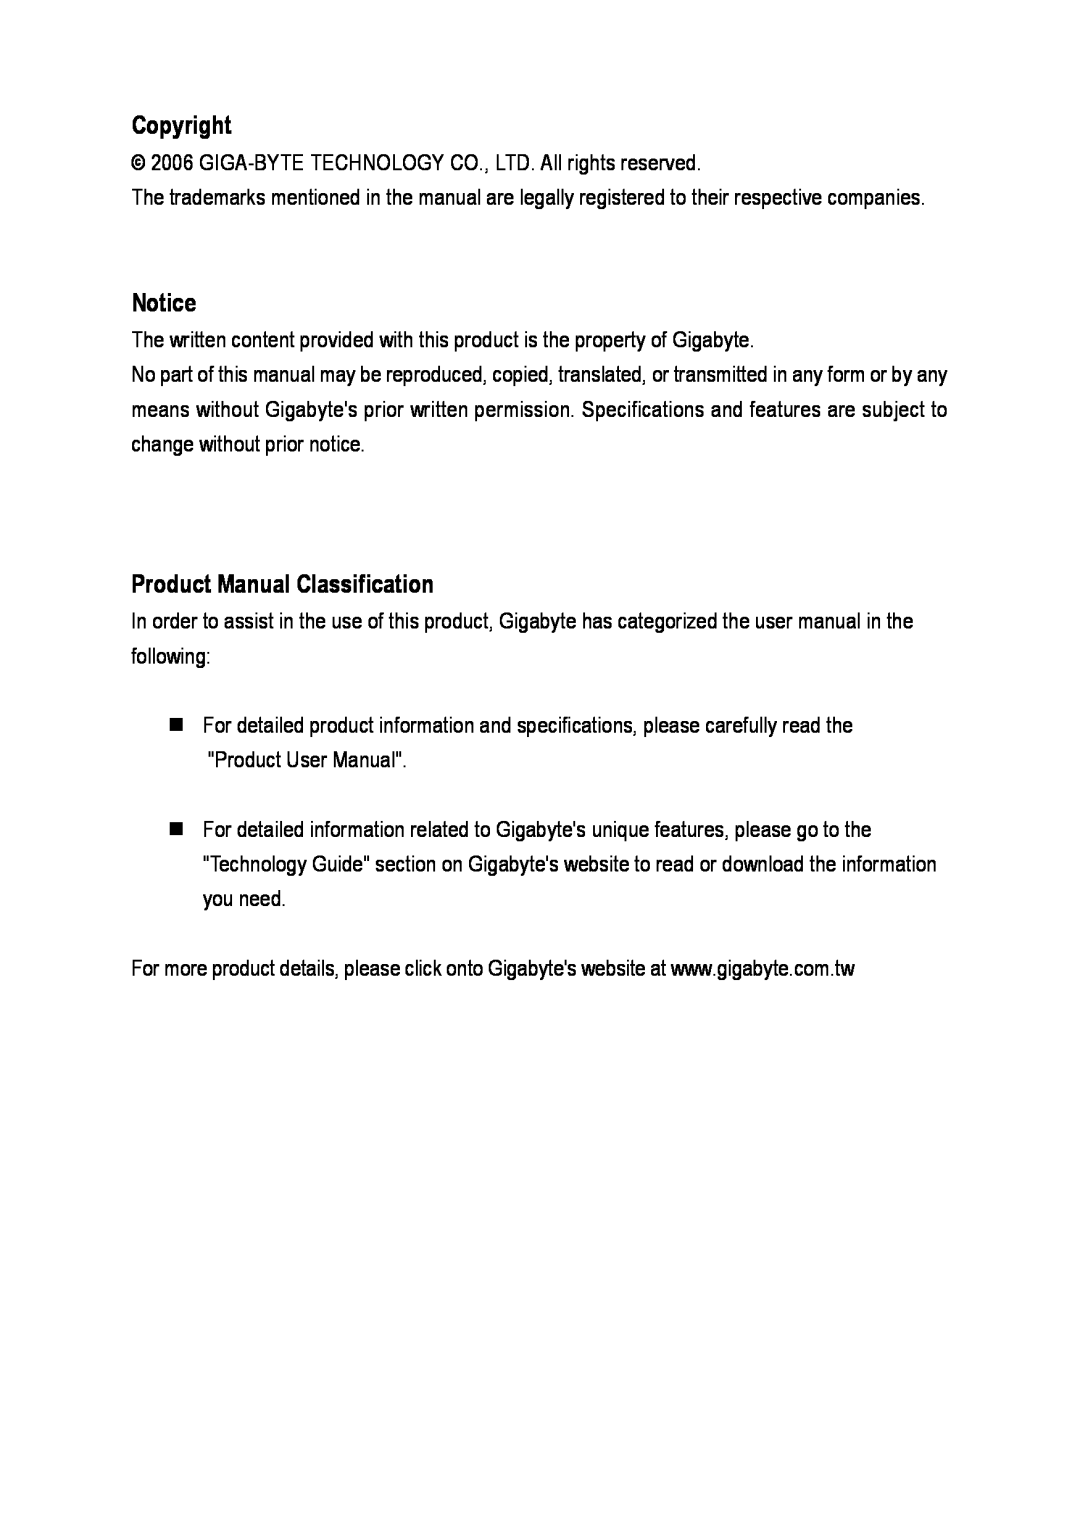 Gigabyte GA-K8N51PVMT-9-RH user manual Copyright, Product Manual Classification 